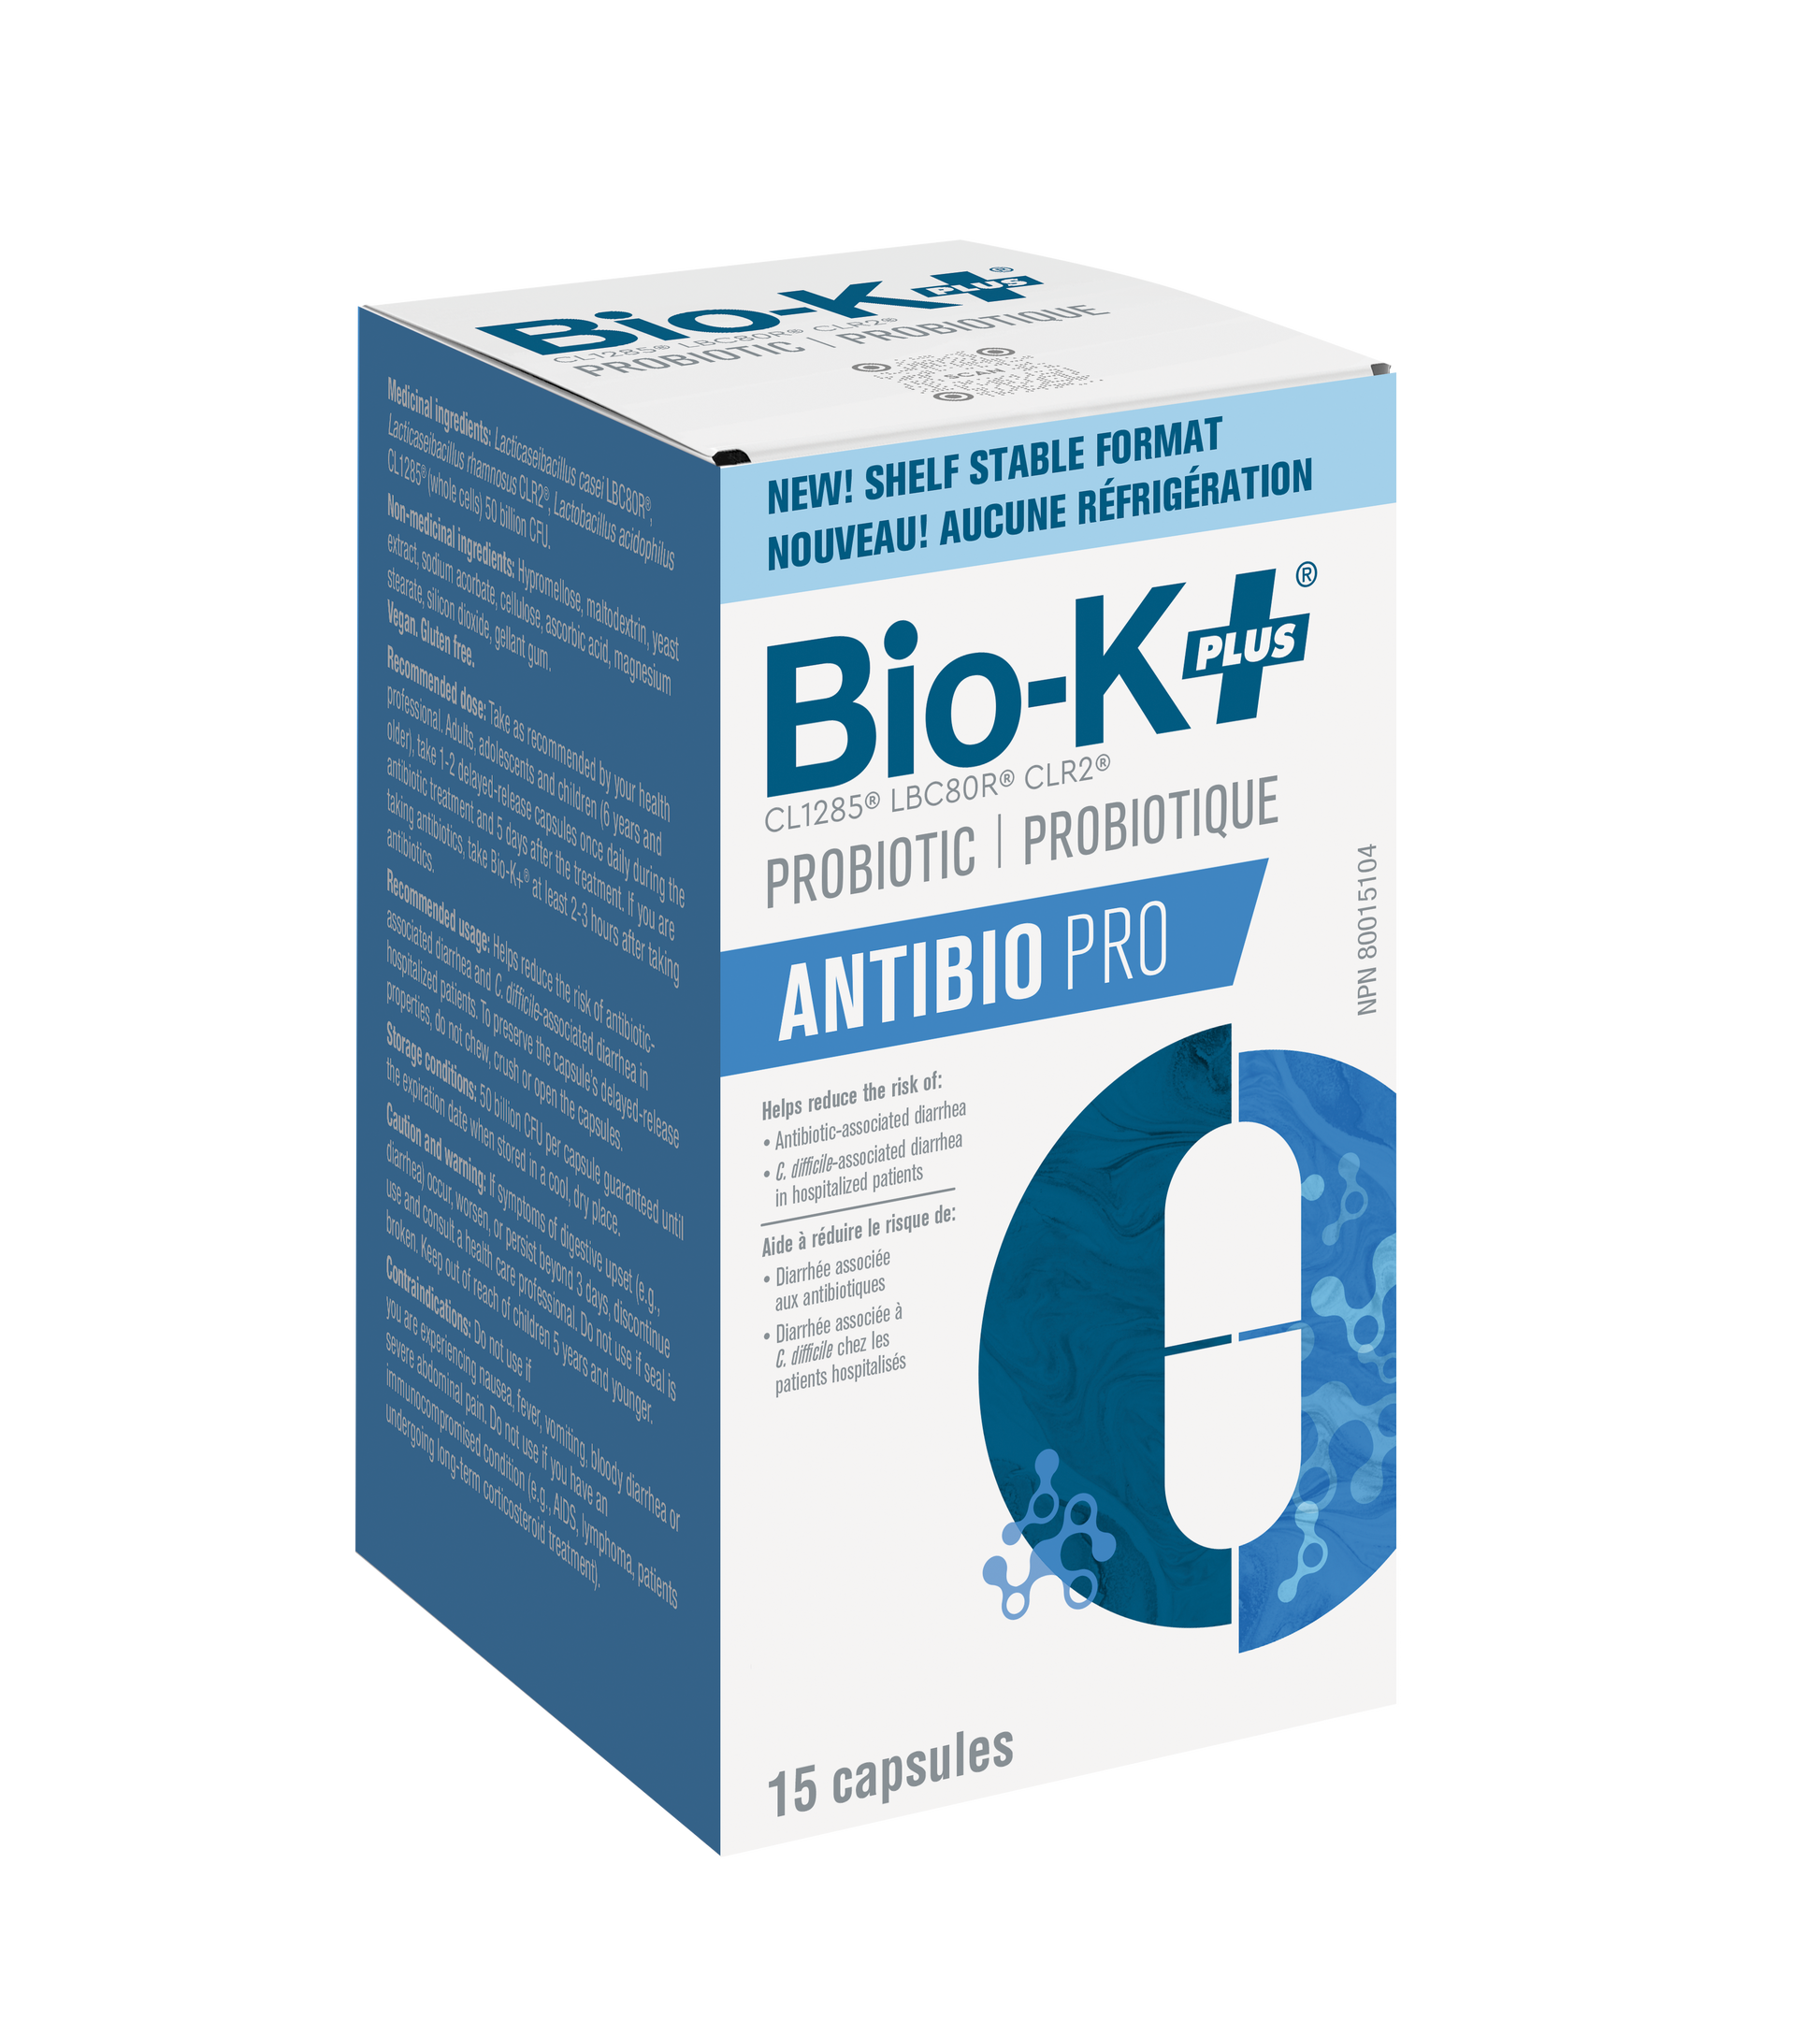 Bio-K+ Antibio Pro packaging